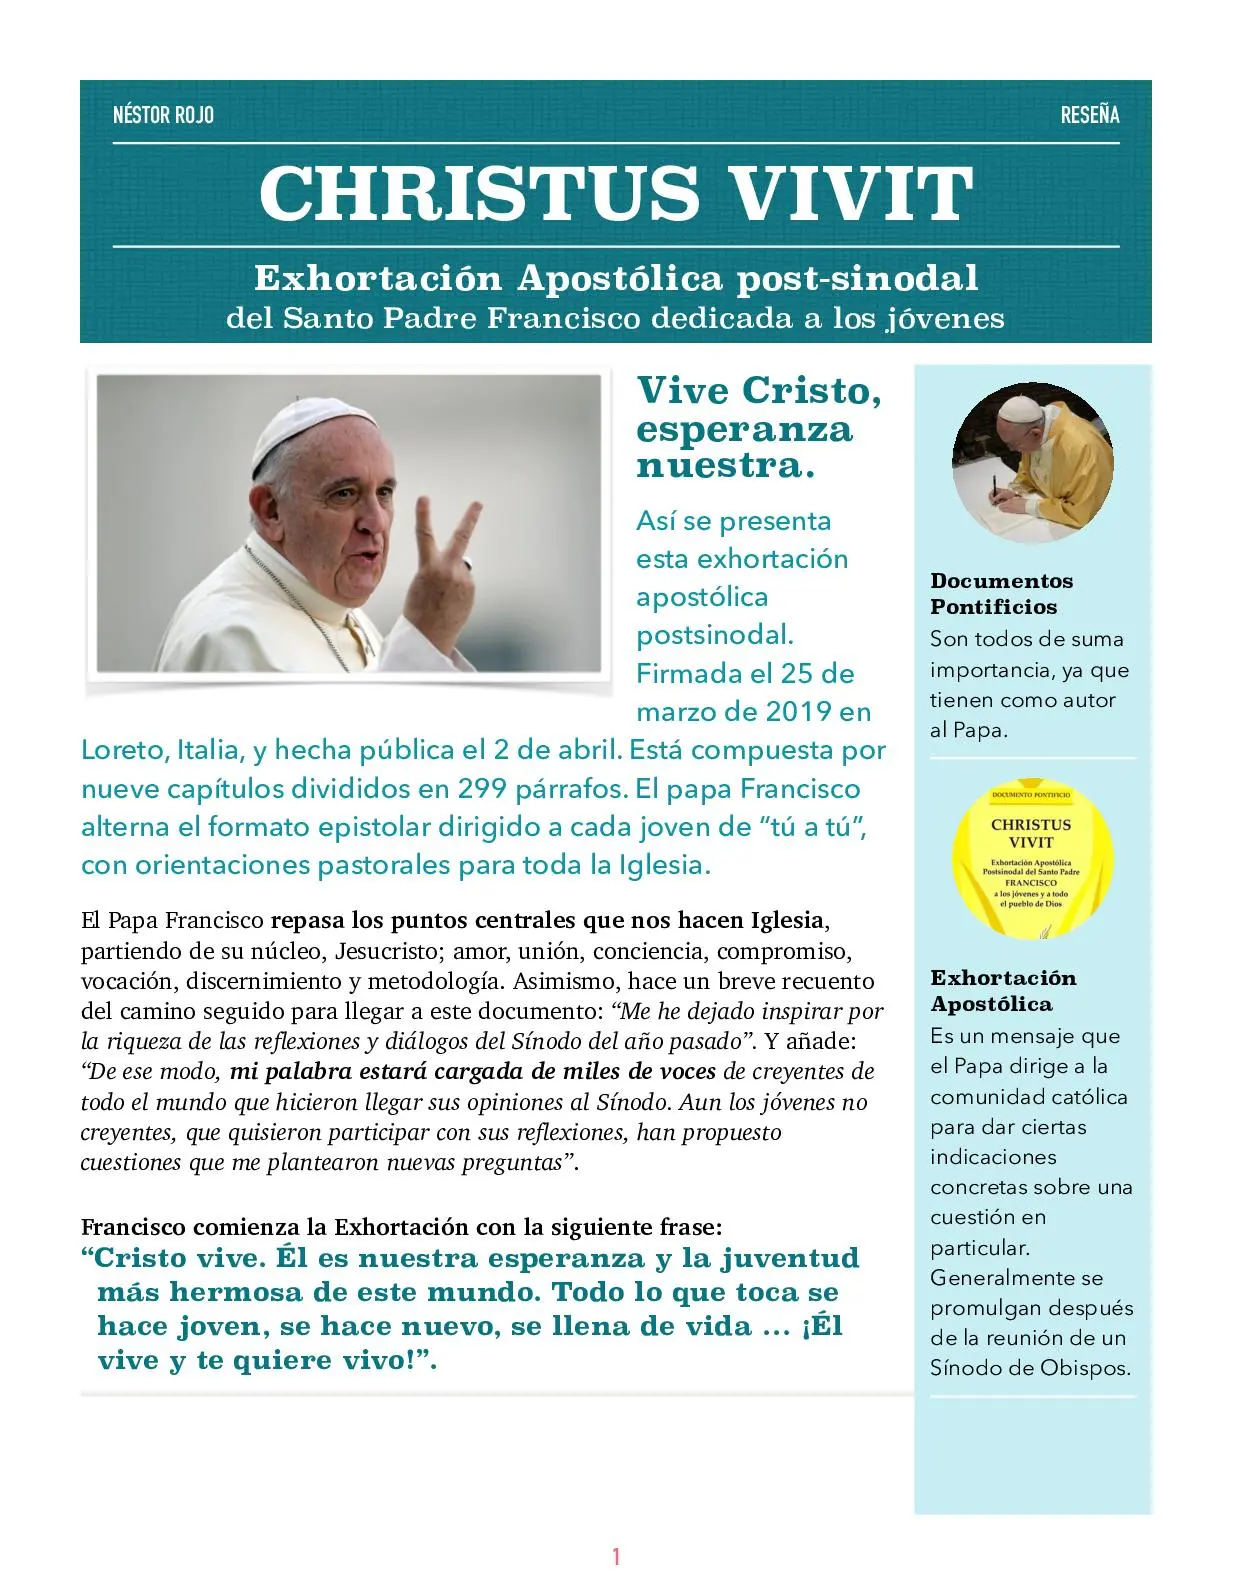 resumen de christus vivit - Qué nos dice Christus Vivit